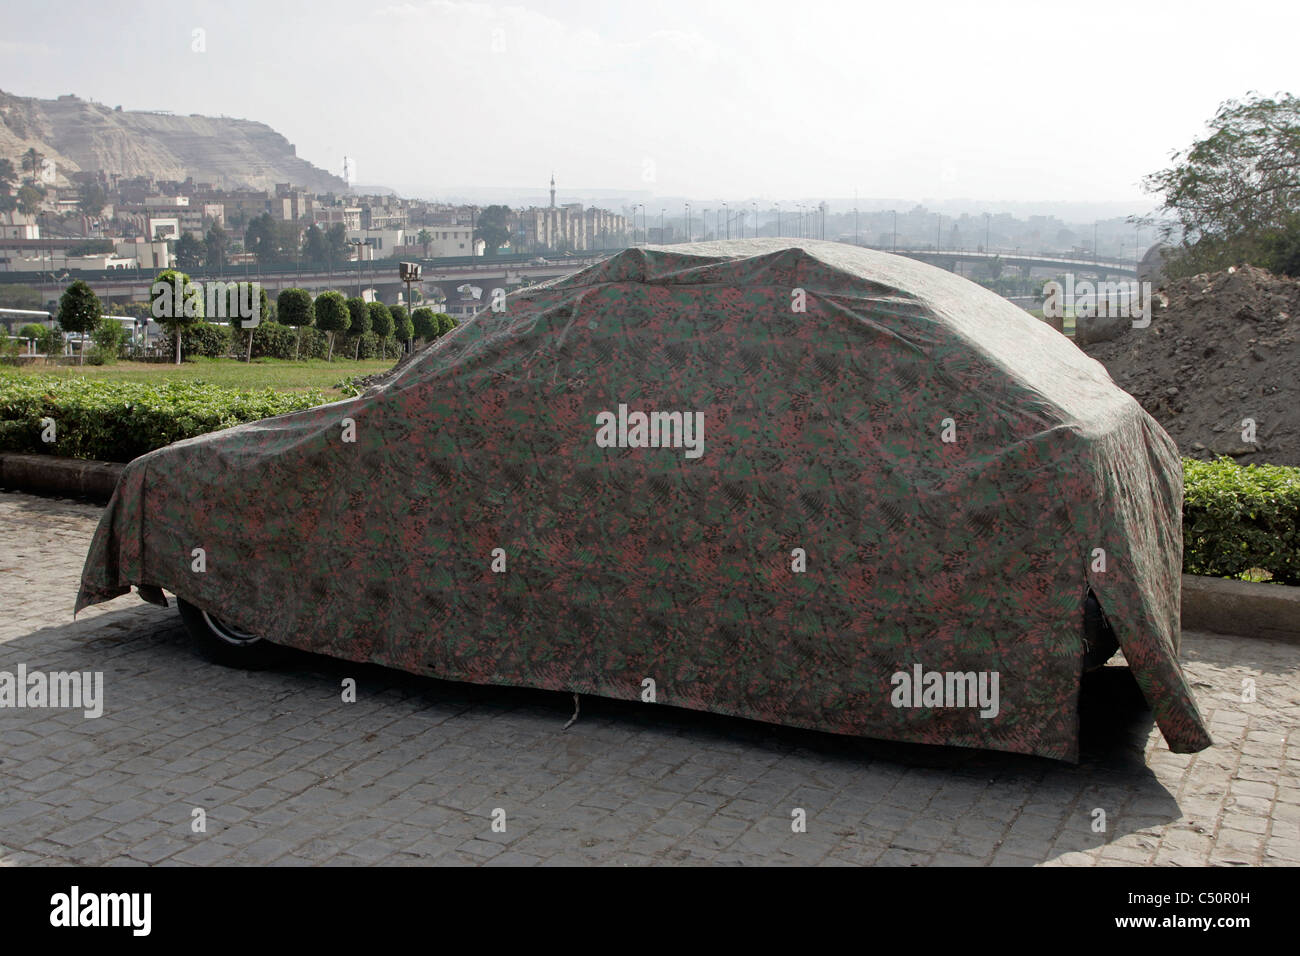 Vertrauter Anblick eines überdachten Autos in Kairo, Ägypten Stockfoto